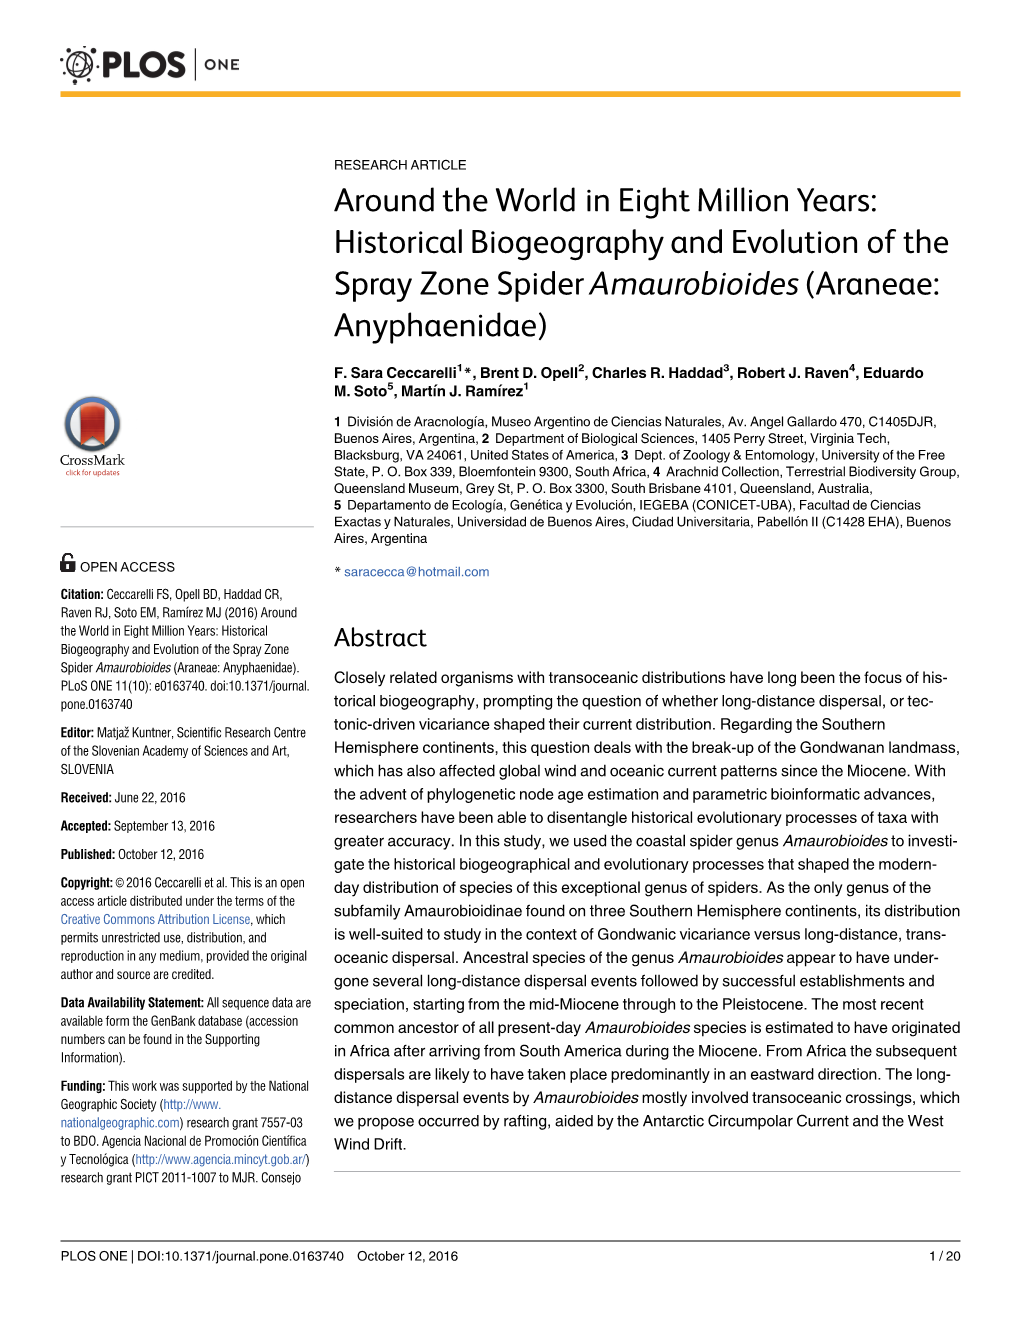 Historical Biogeography and Evolution of the Spray Zone Spider Amaurobioides (Araneae: Anyphaenidae)